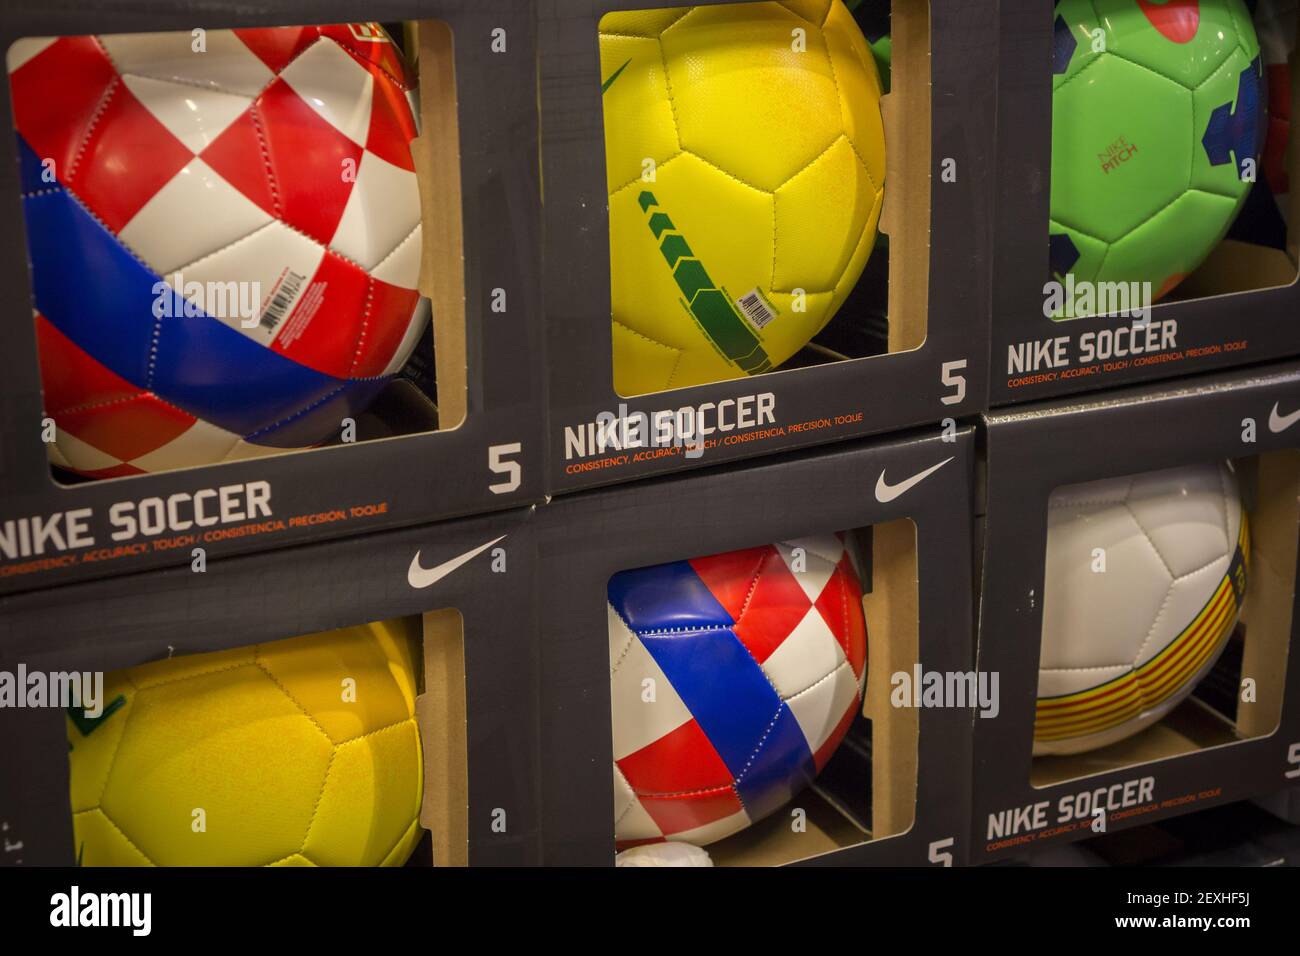 Nike football (soccer) merchandising items in New York Stock Photo - Alamy